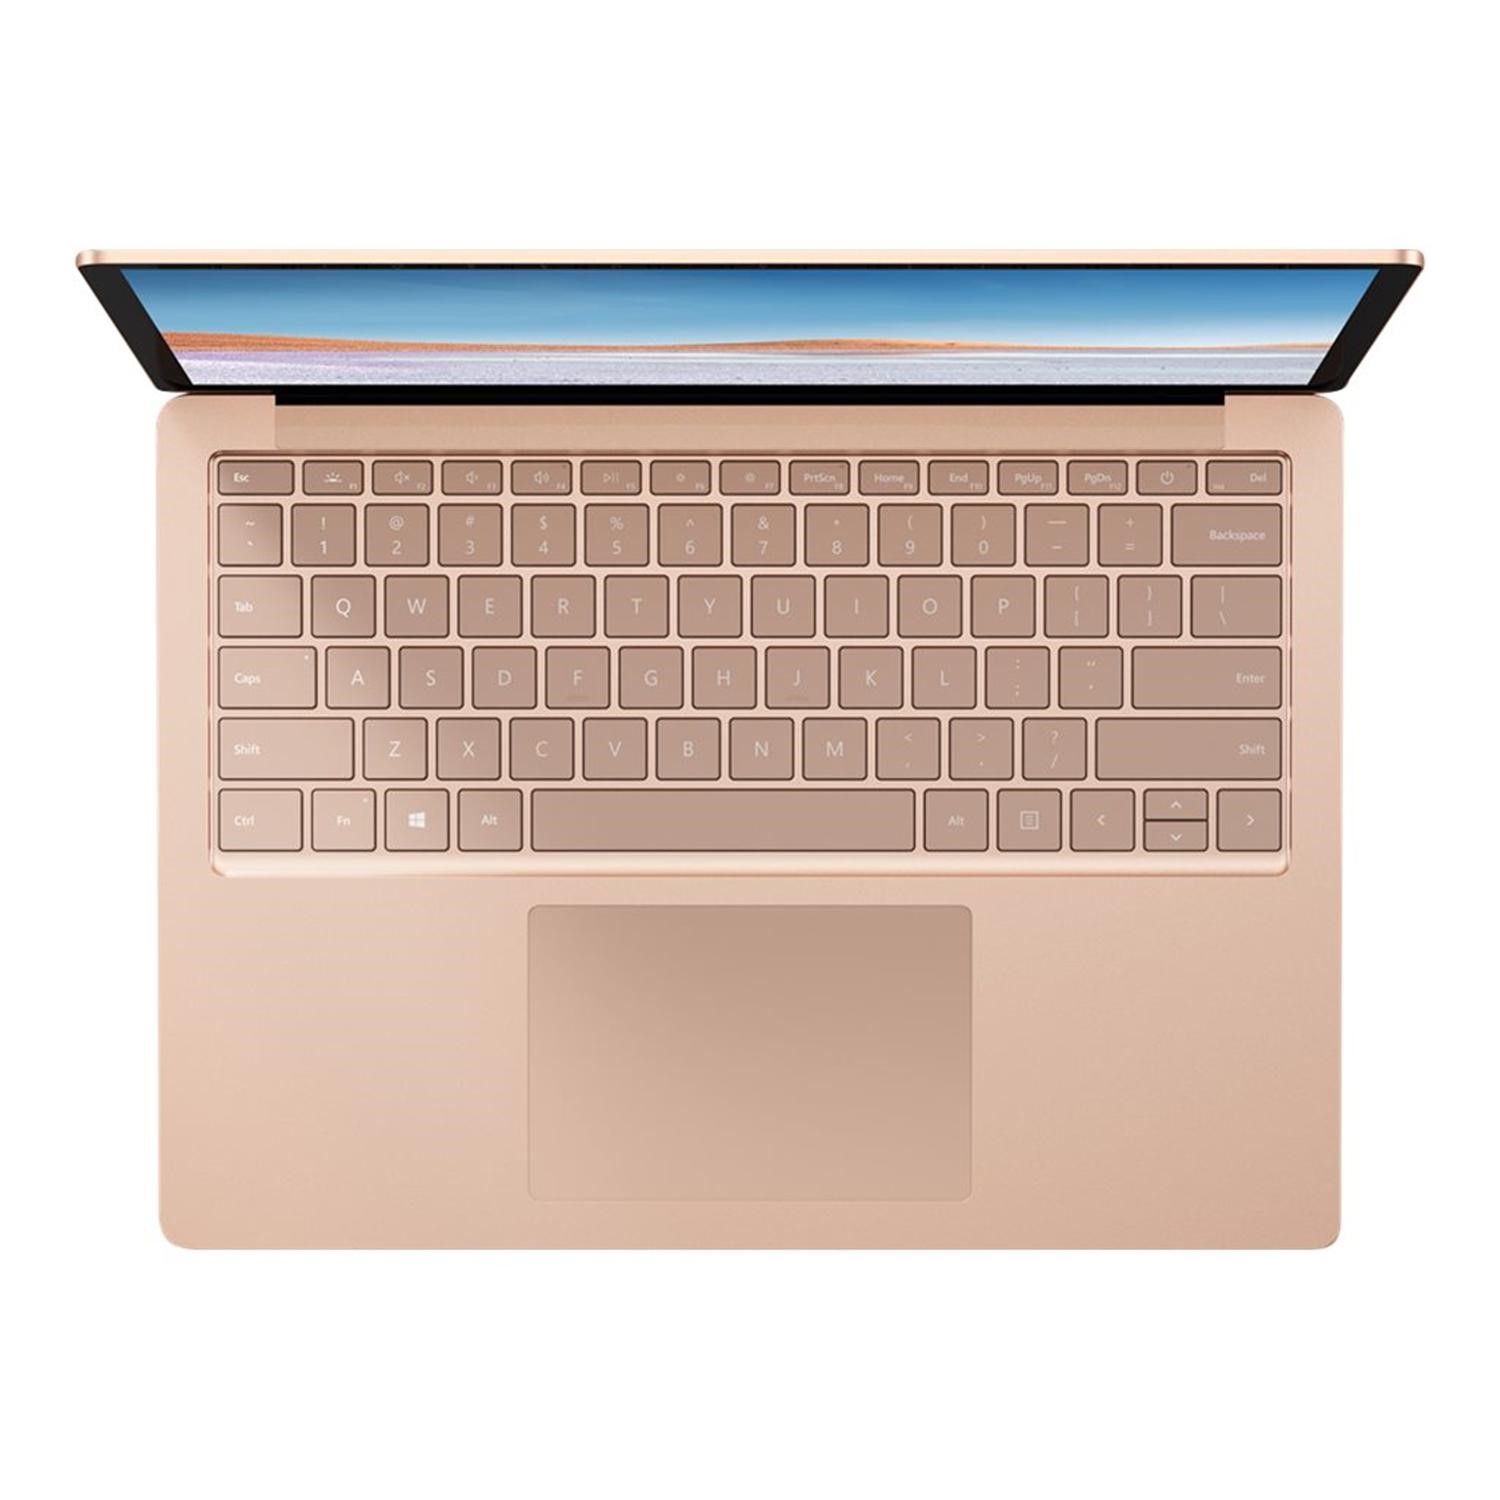 Microsoft Surface Laptop 3 Core i5-1035G7 8GB 256GB SSD 13.5 Inch  Touchscreen Windows 10 Pro Laptop - Sandstone